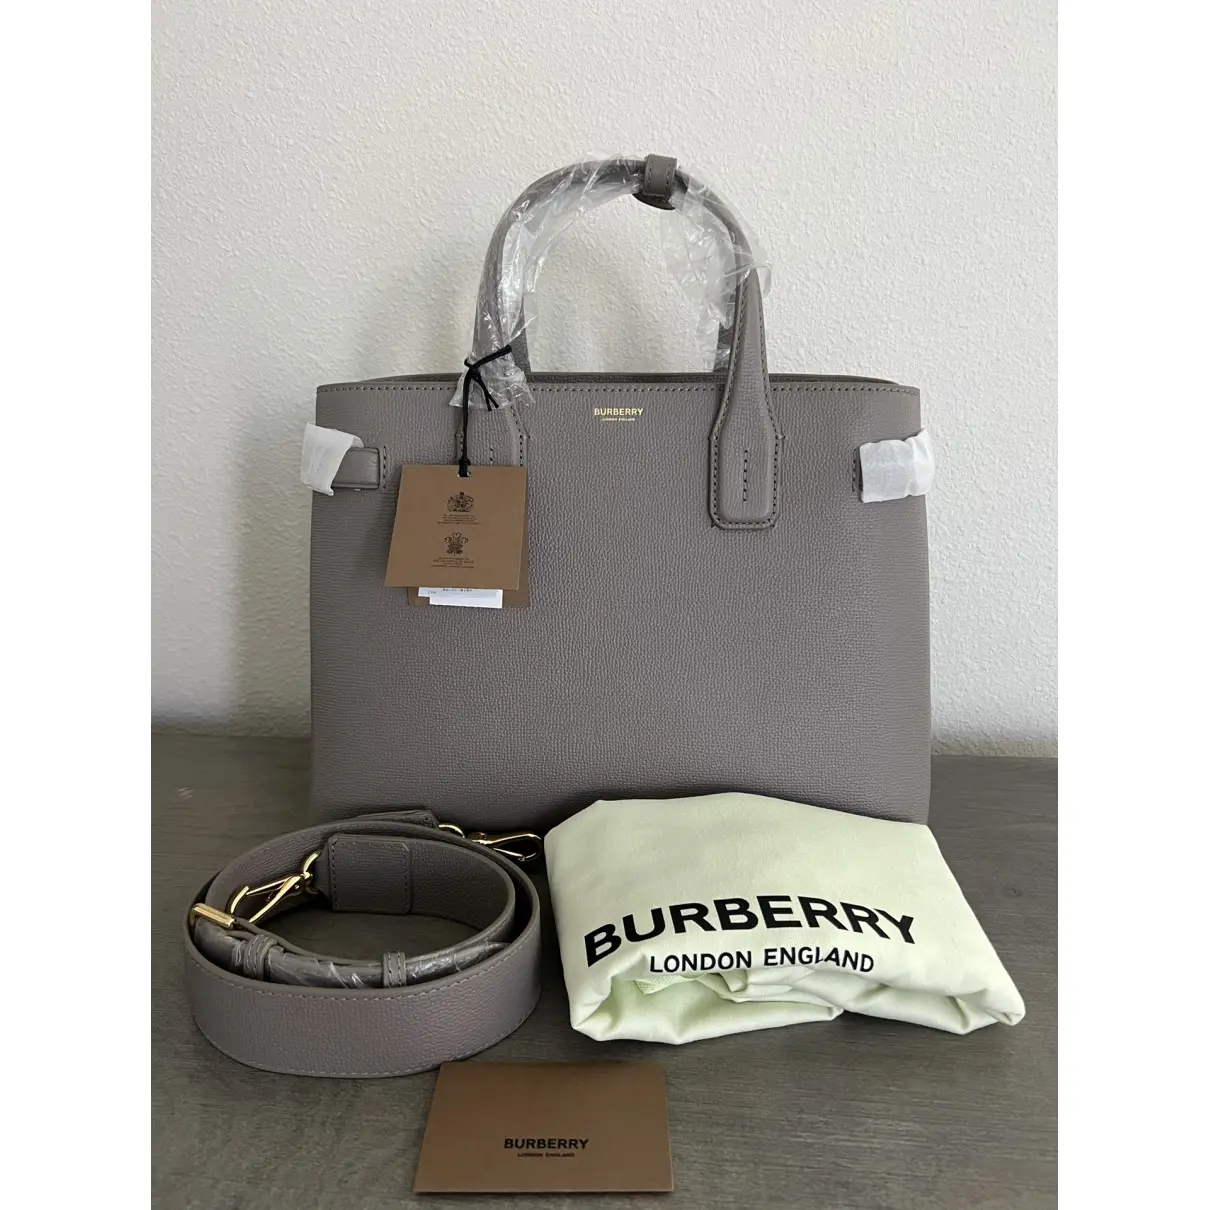 Buy Burberry Leather satchel online